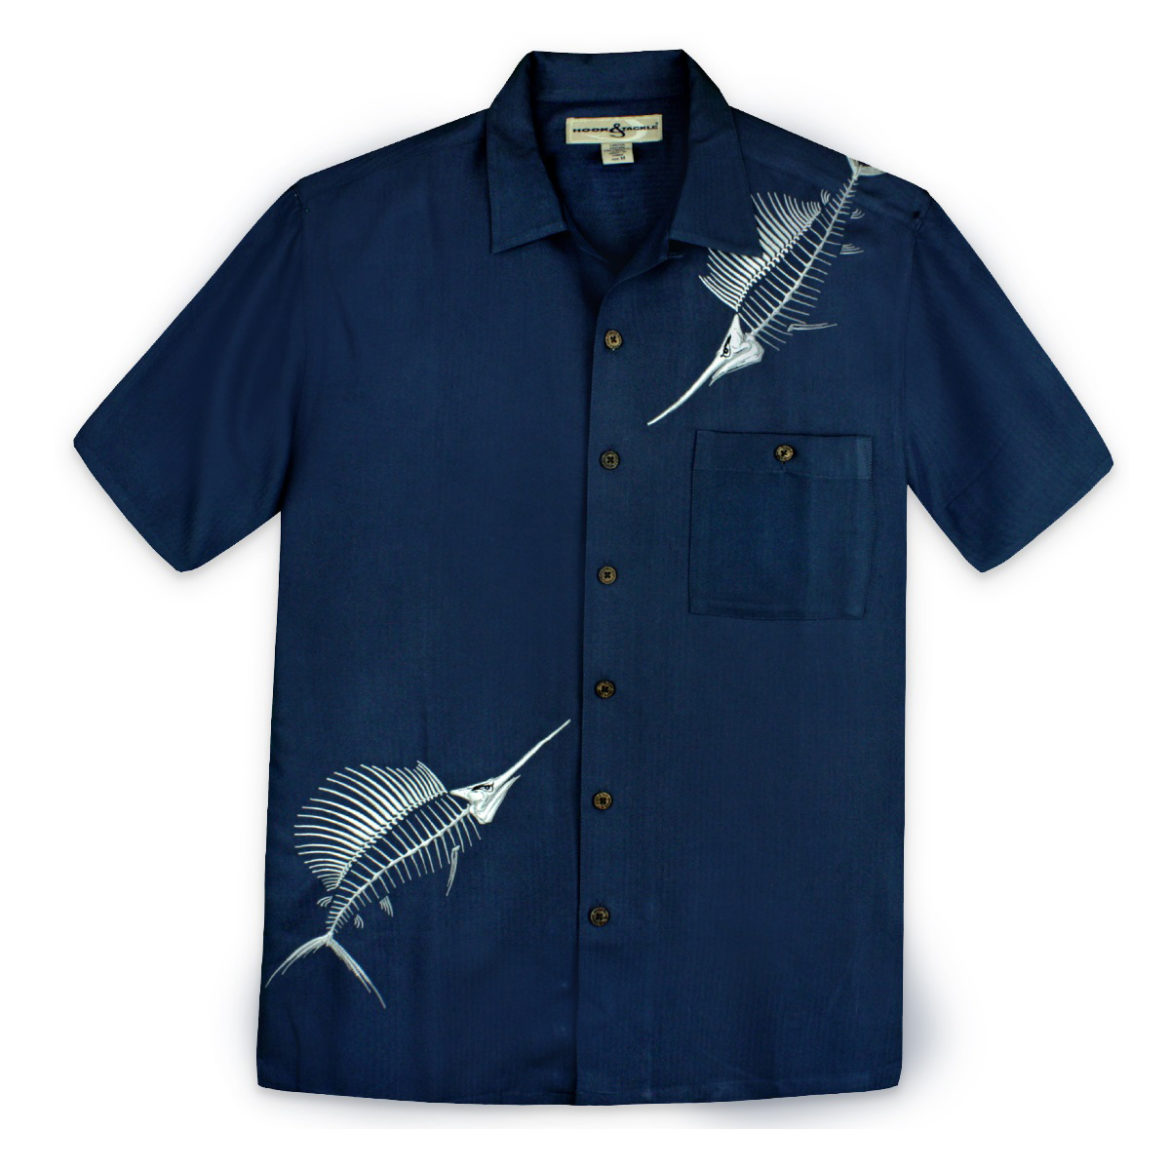 Mens Resort Shirt - Hook & Tackle - Sailfish Bones - Navy blue